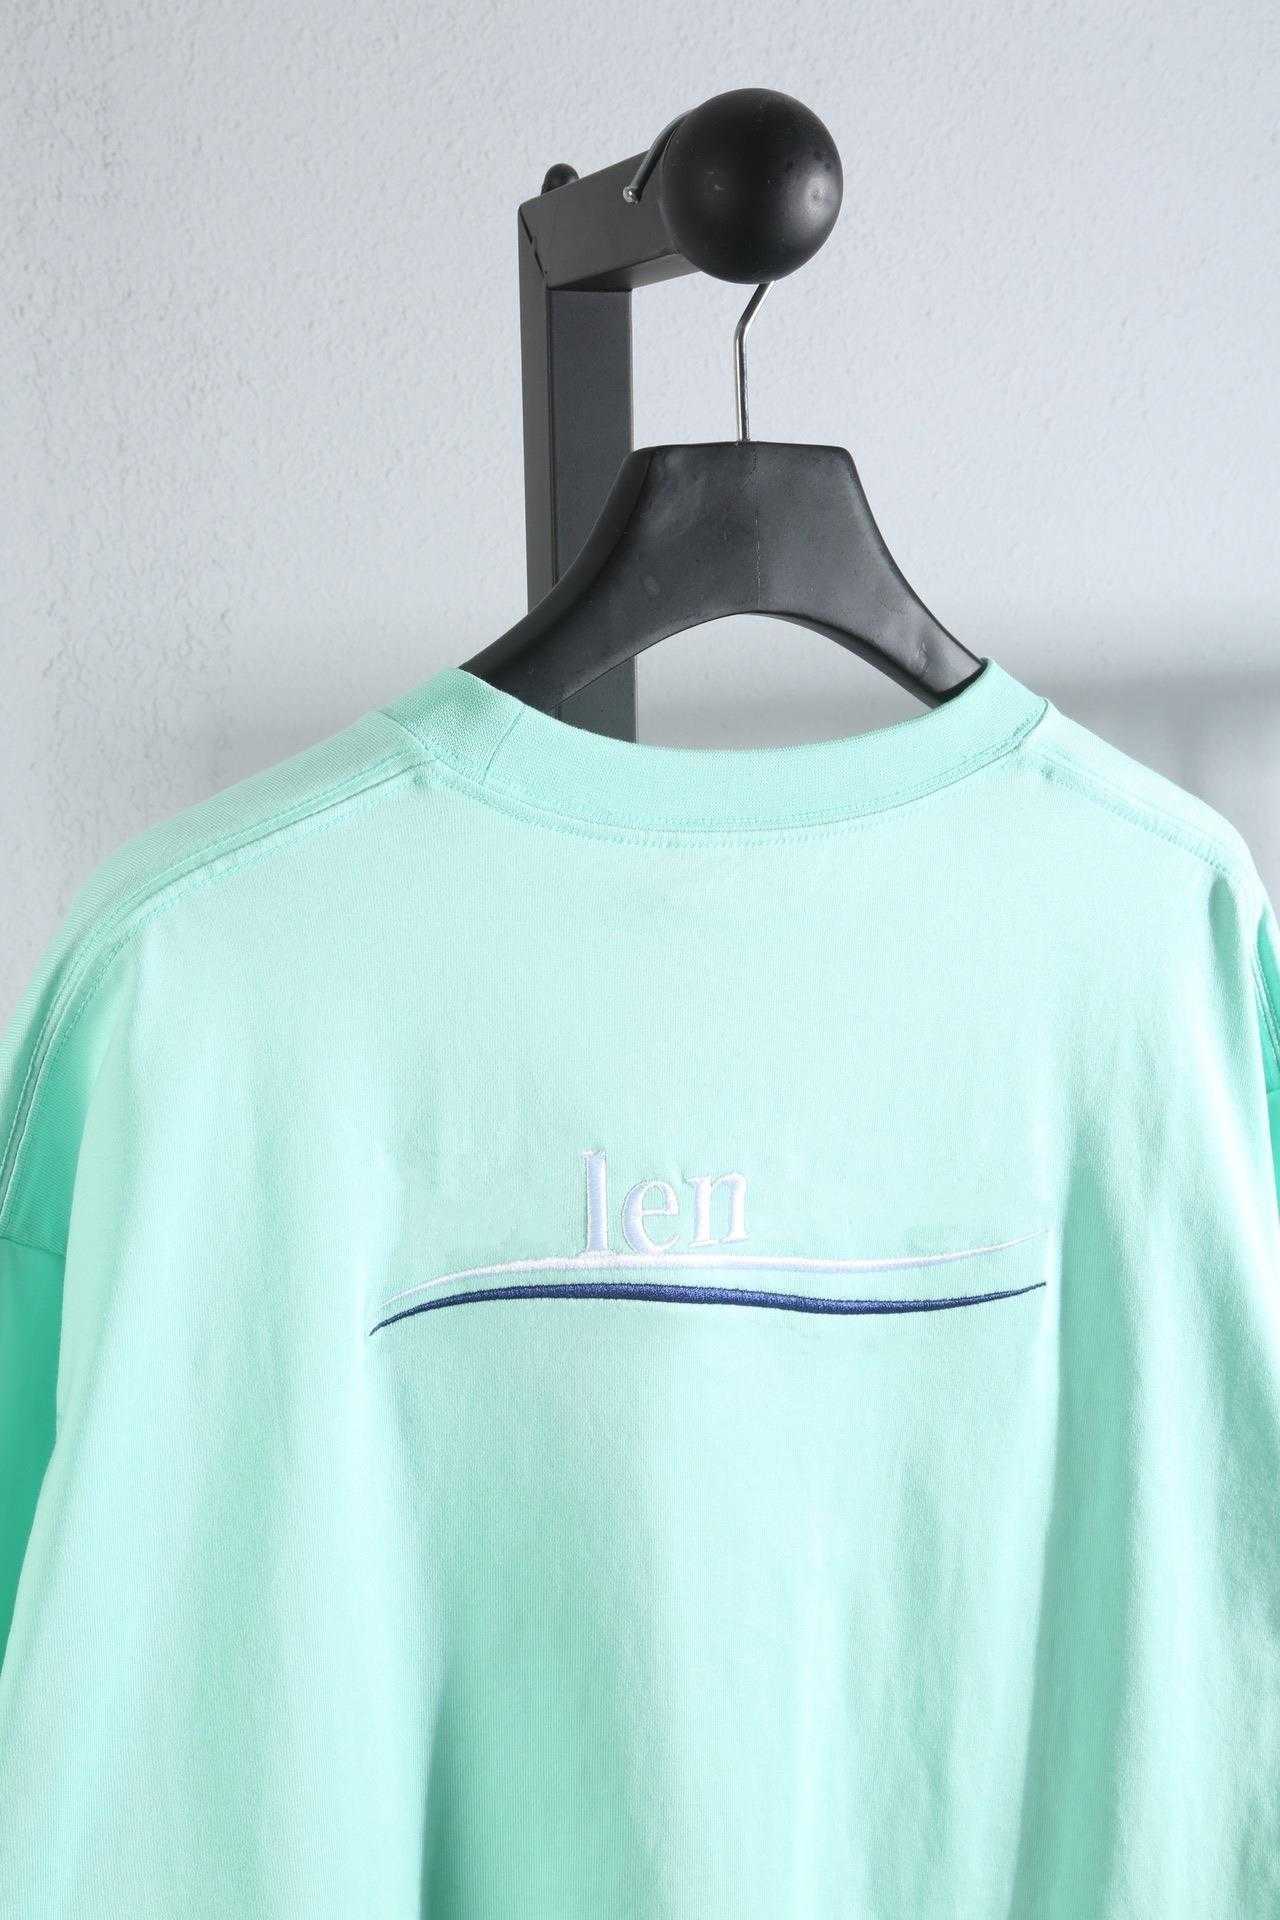 Designer summer women t shirt Shirt High Edition Coke Embroidery Sleeve Loose Fit Unisex T-shirt Casual Versatile Spring/Summer